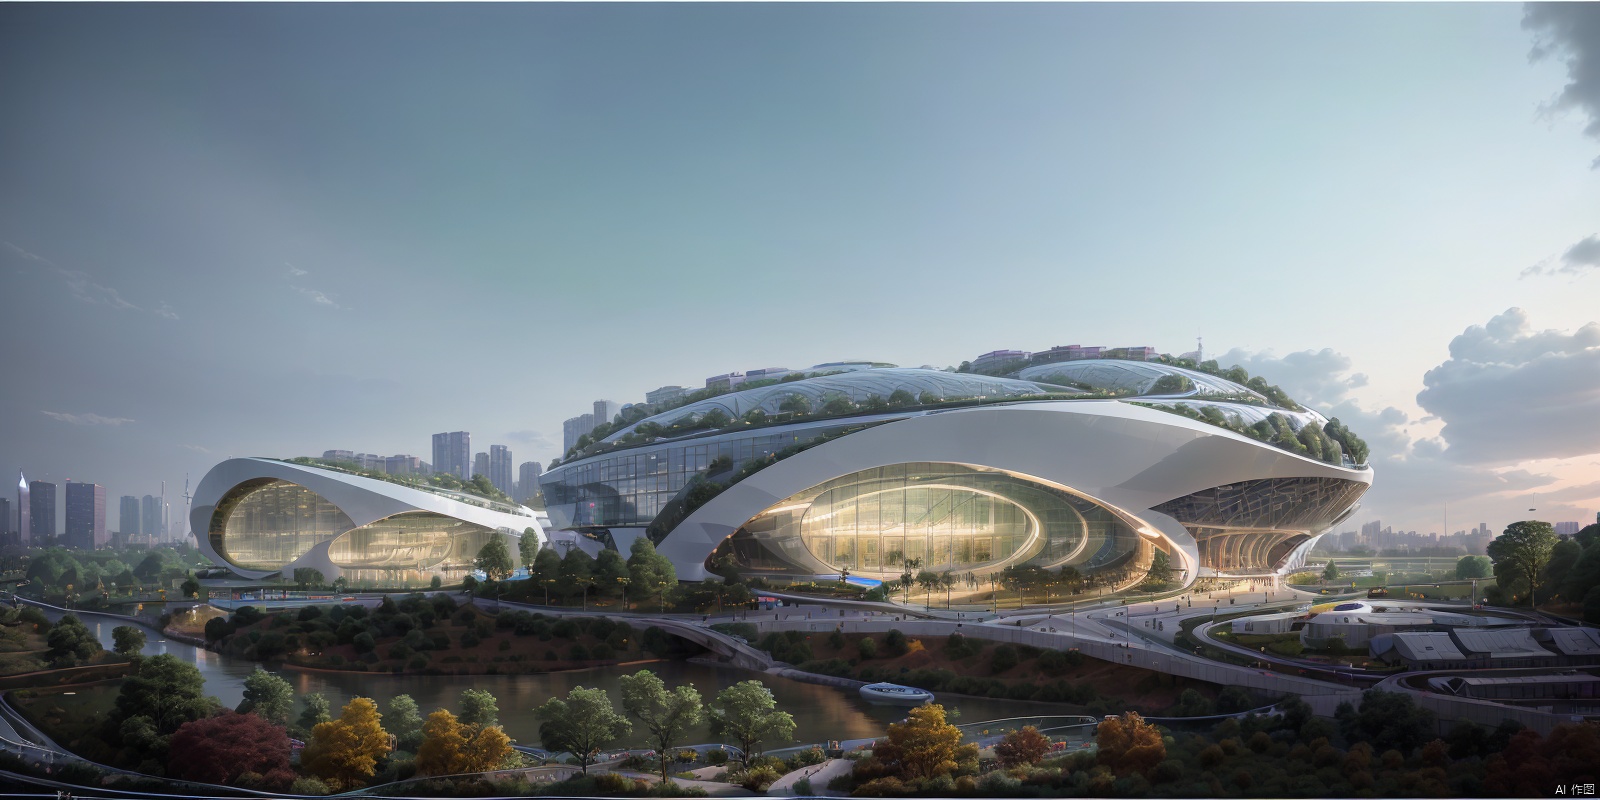  River view, urban, Futuristic, Technological, MIR, modern architecture, ecology,Text, Green Park
, Landscape,Alien Exhibition Hall